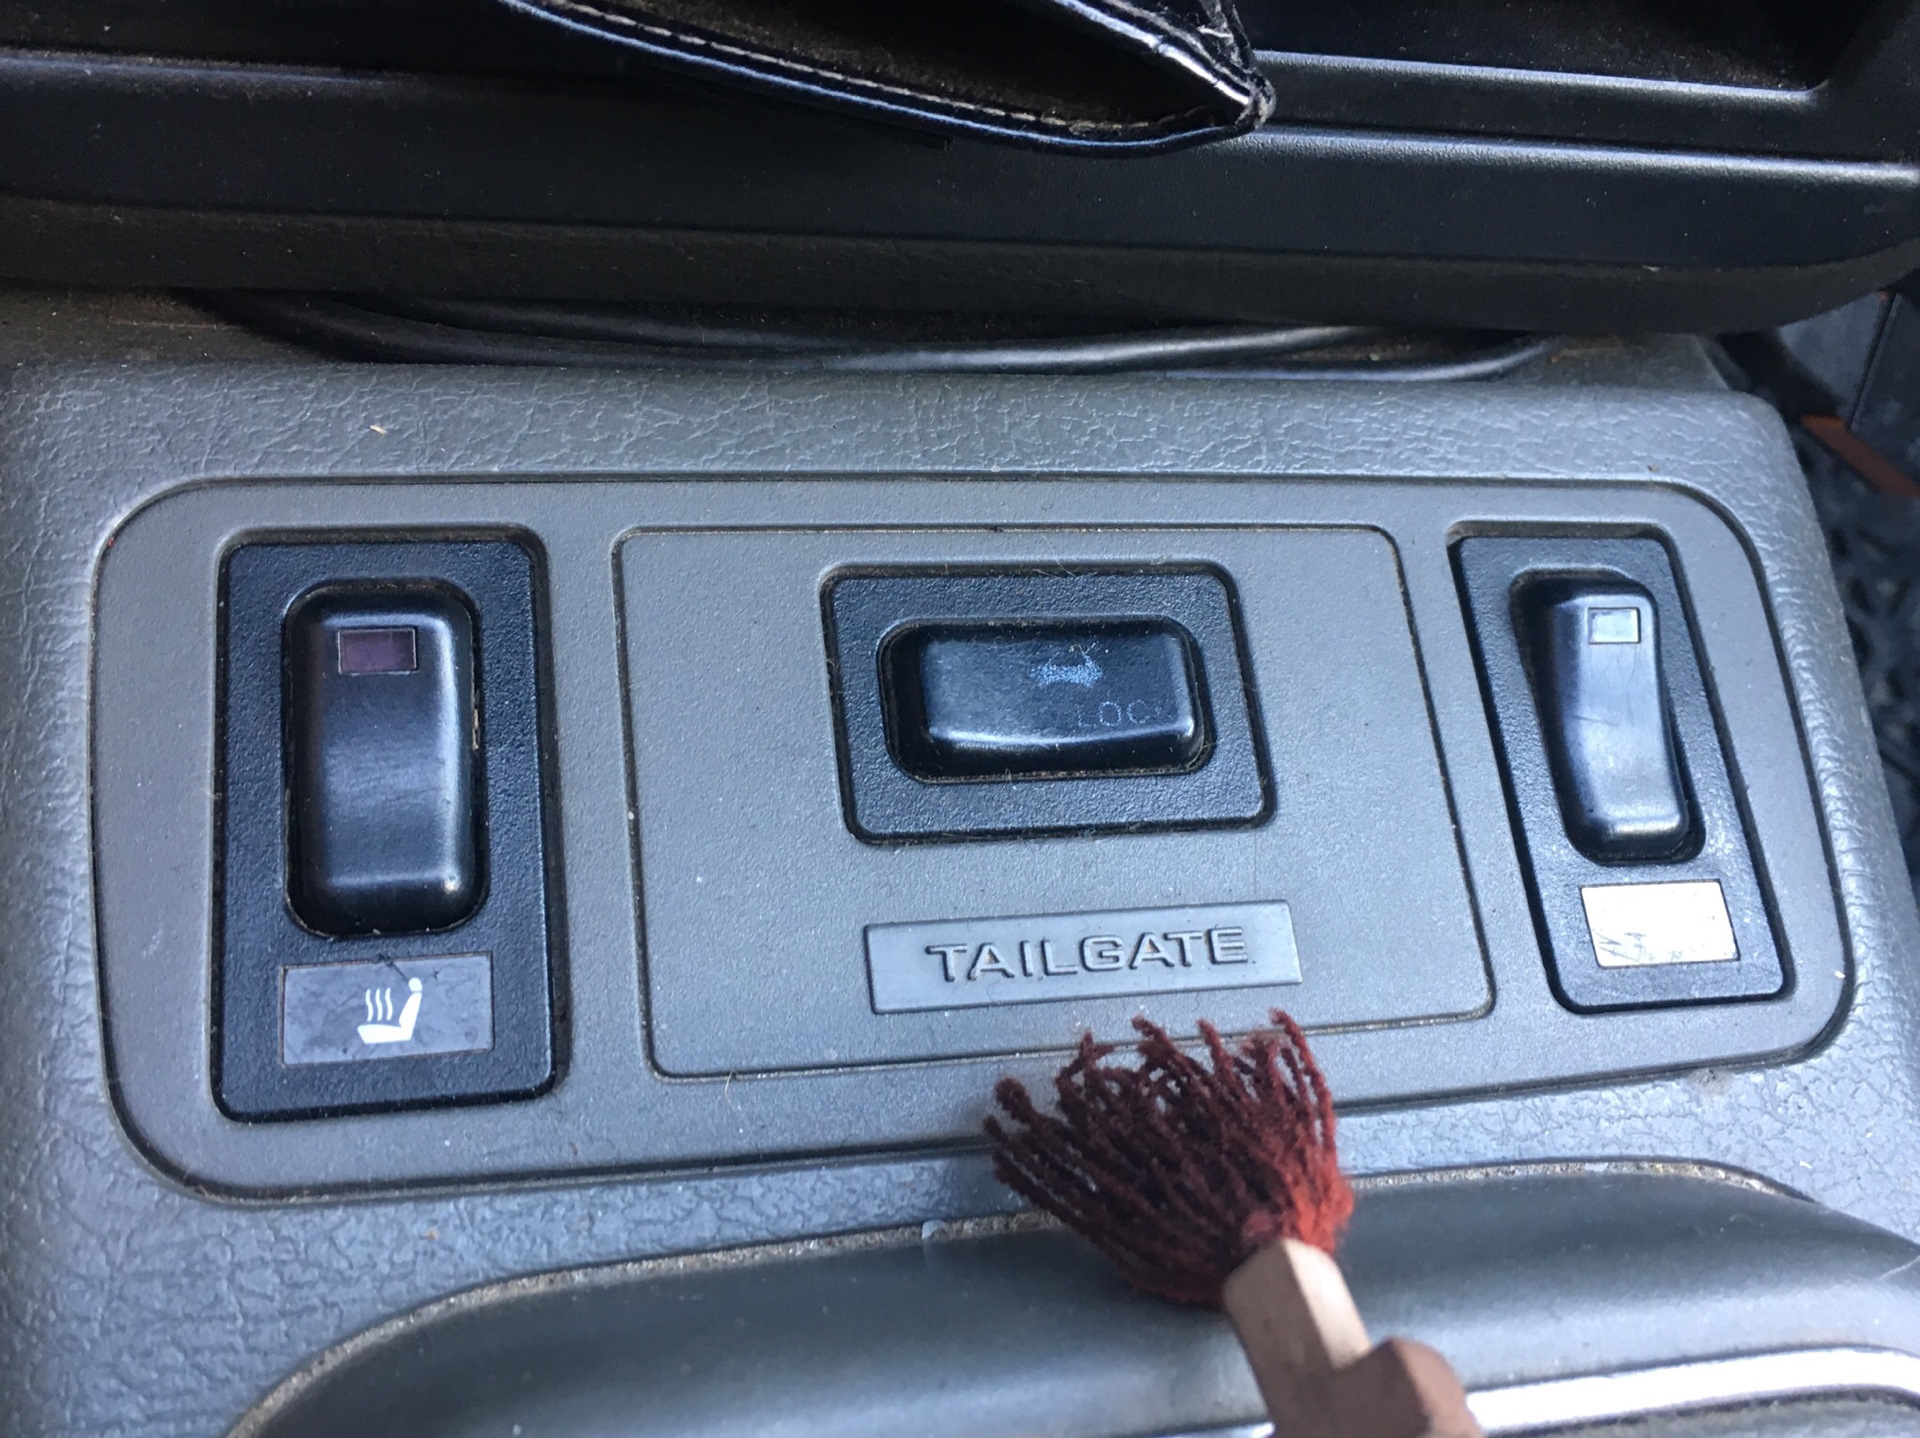 Подогрев сидений mazda. Подогрев сидений Мазда 626 GV. Mazda 626 LX обогрев сидений кнопка. Подогрев сидений Mazda 626 gf. Кнопка подогрева сидений Мазда 626 2001г.